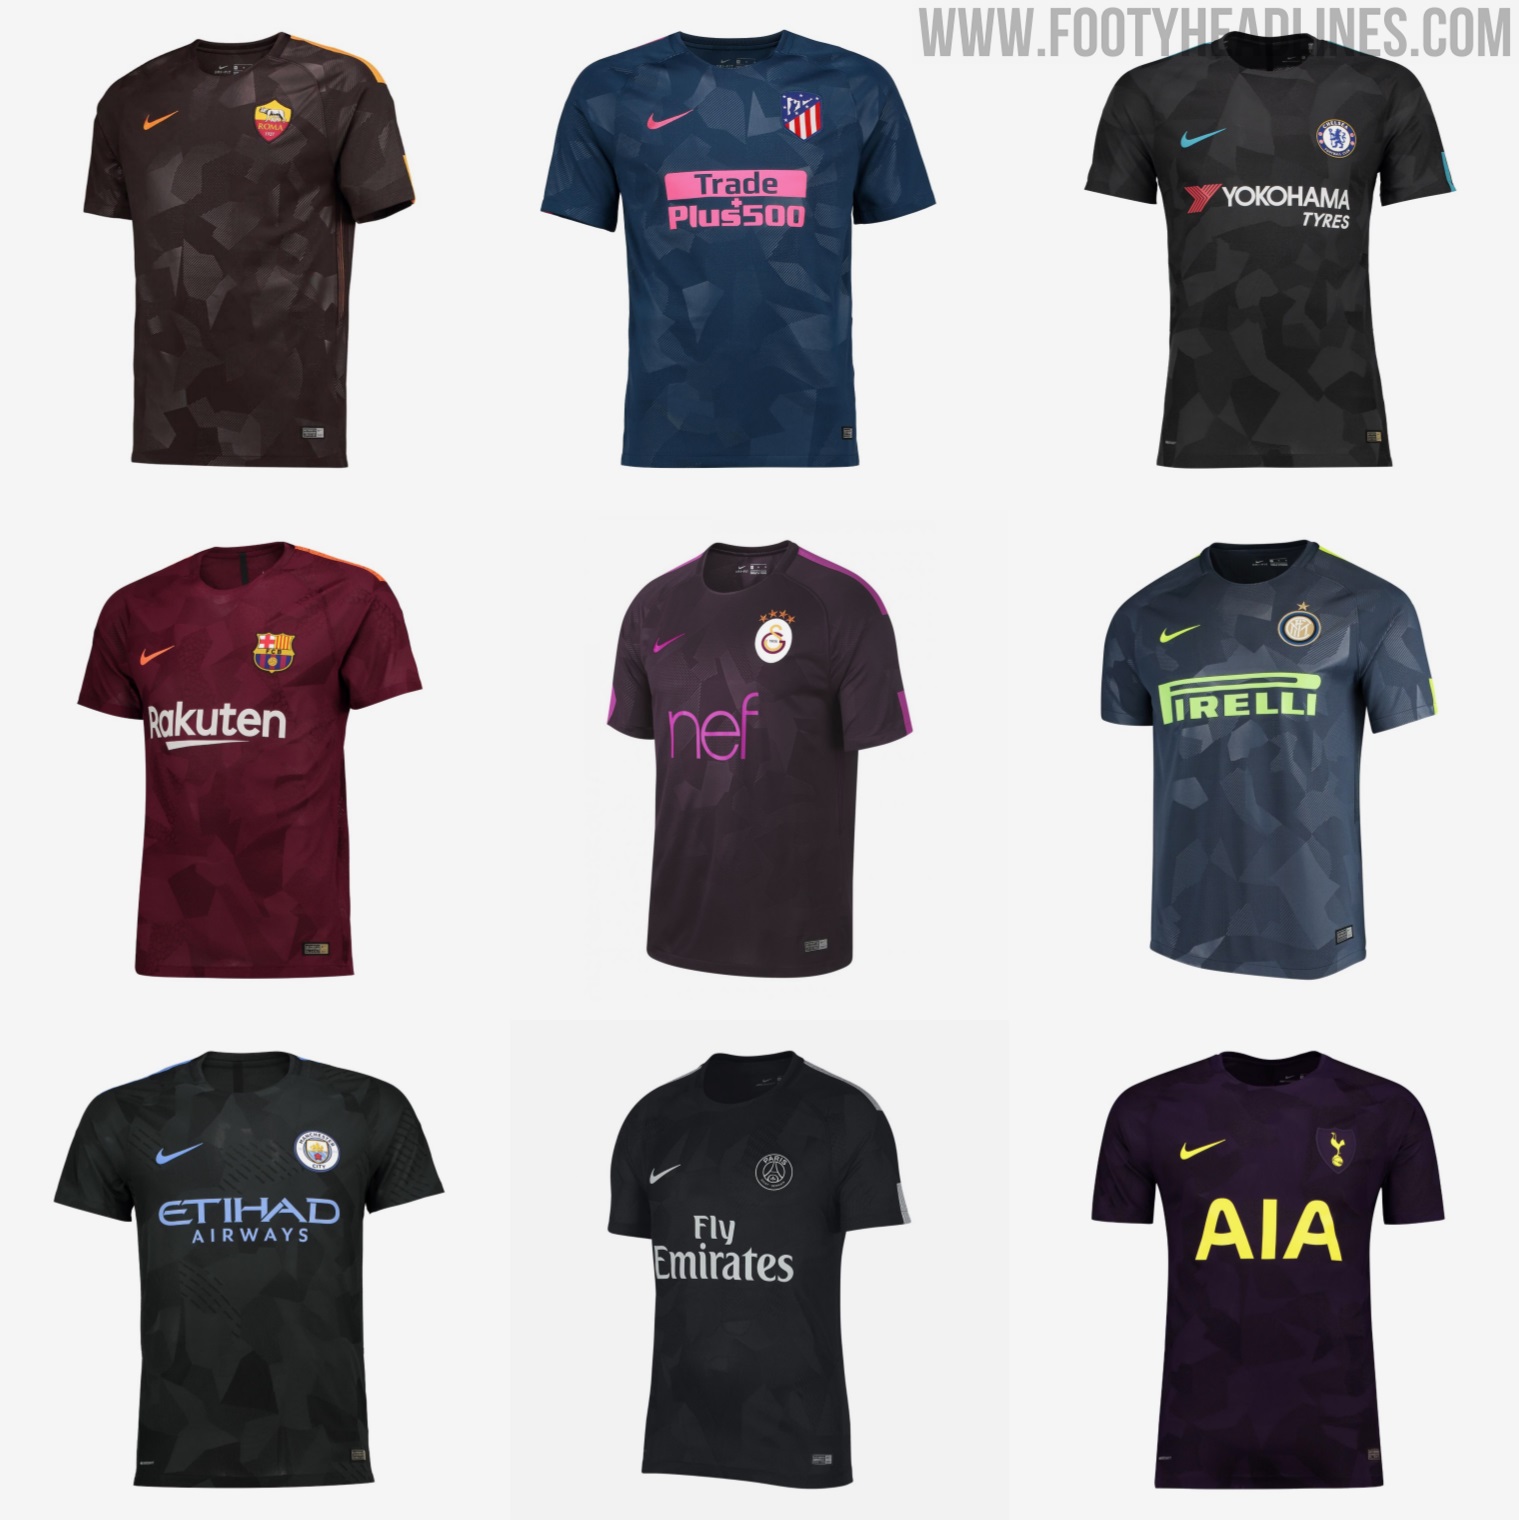 Even Tottenham's 2018-19 third kits are freakin' Nike templates